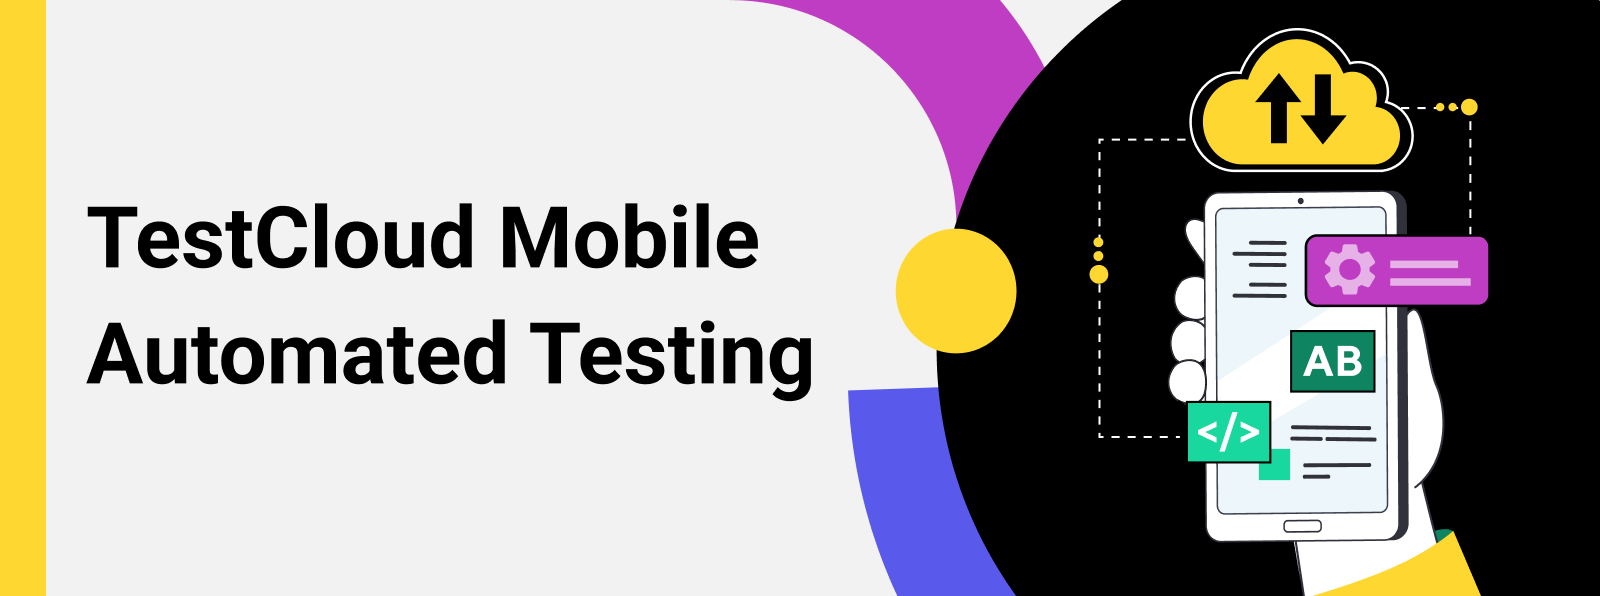 Testcloud mobile testing